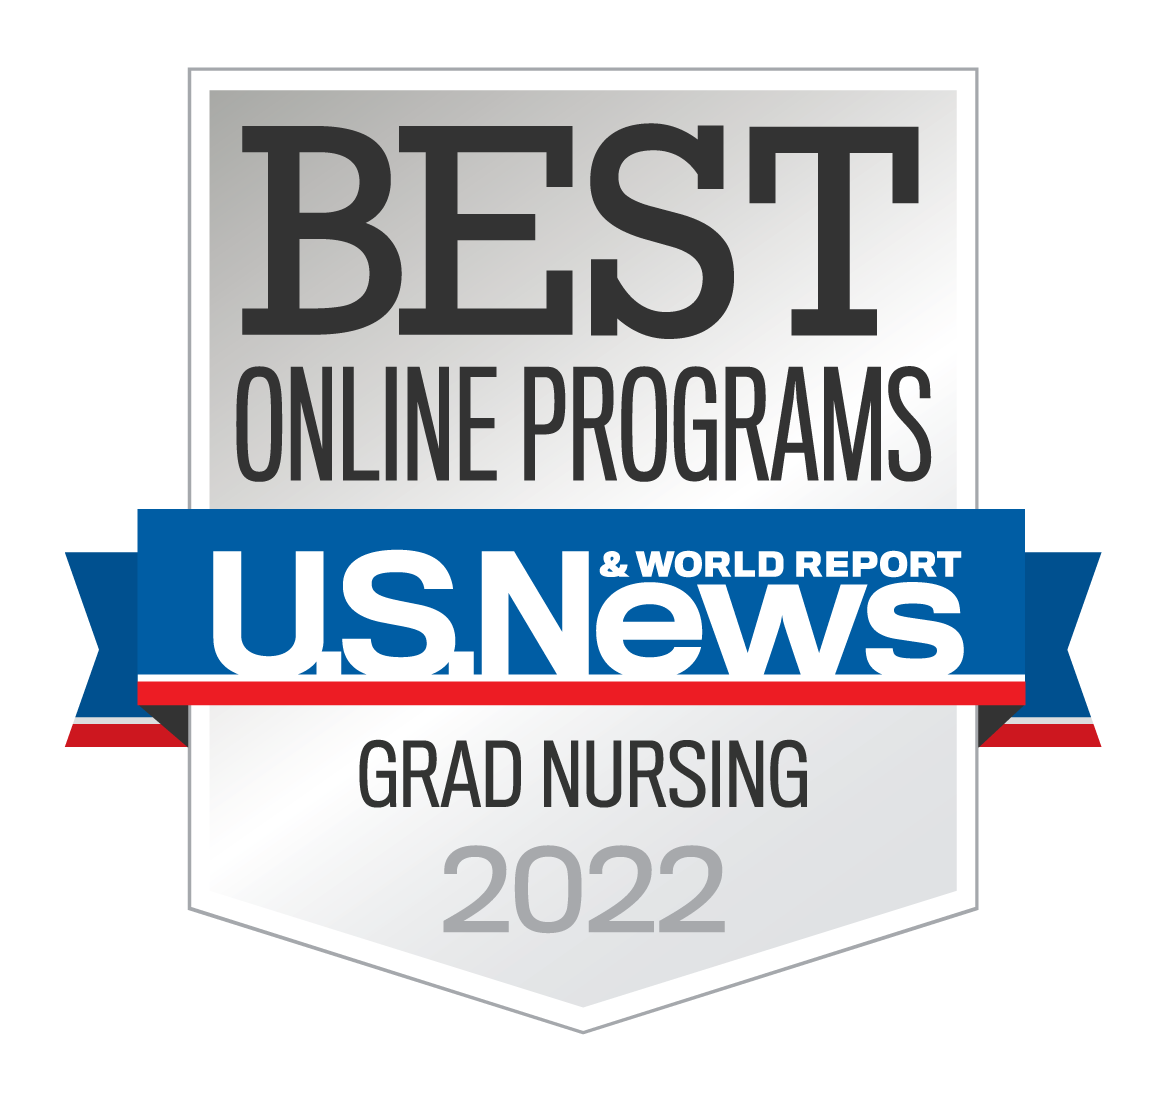 US News and World Report - best grad nursing program 2022